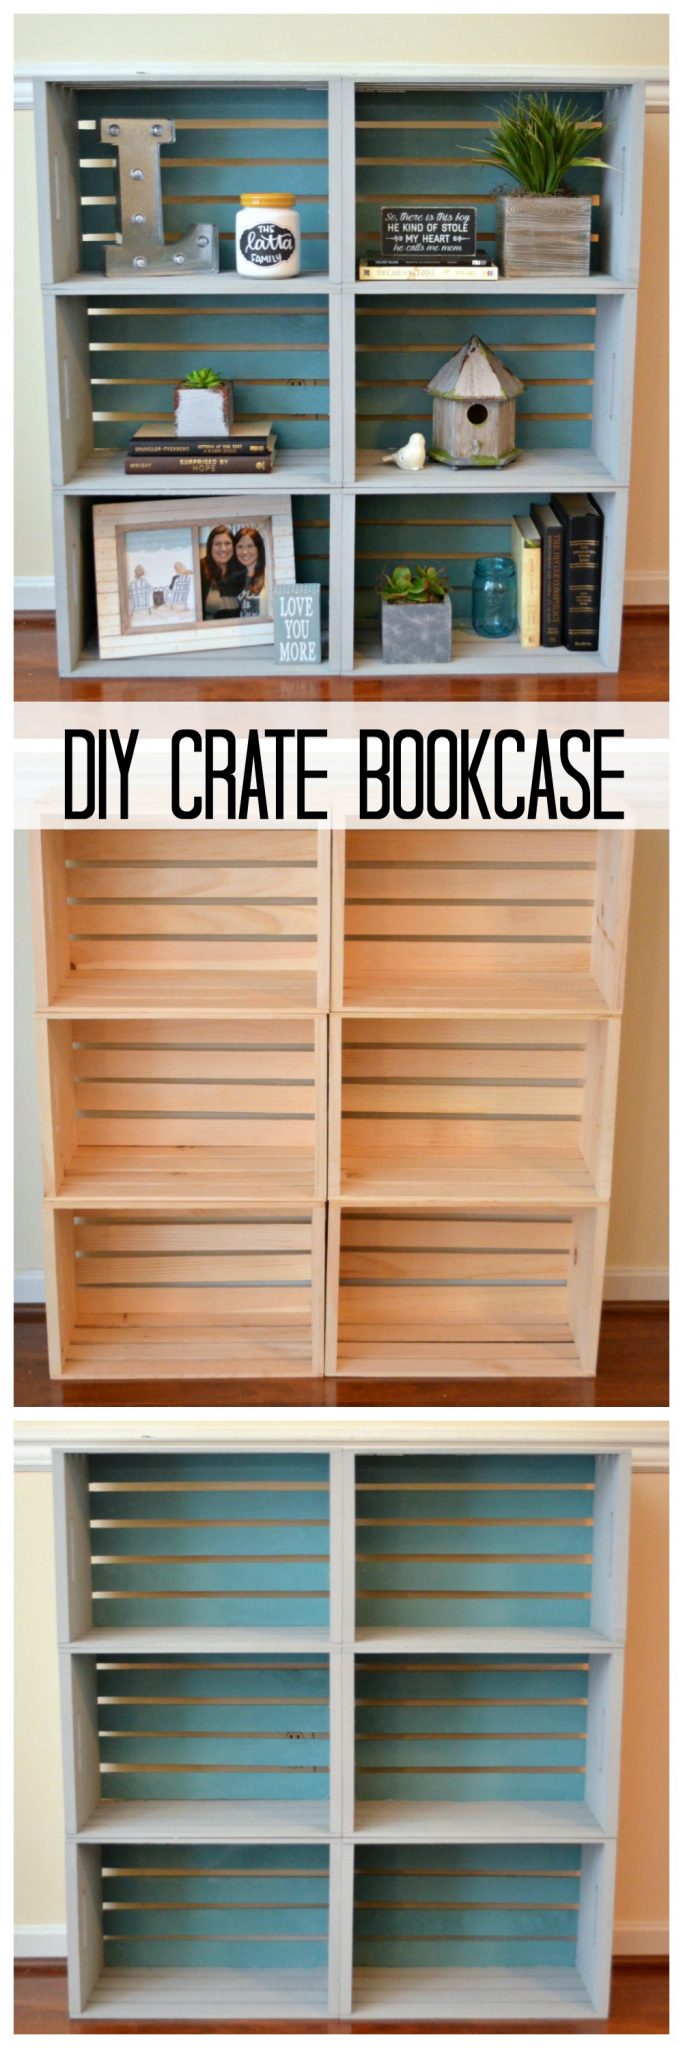 DIY Crate Bookcase